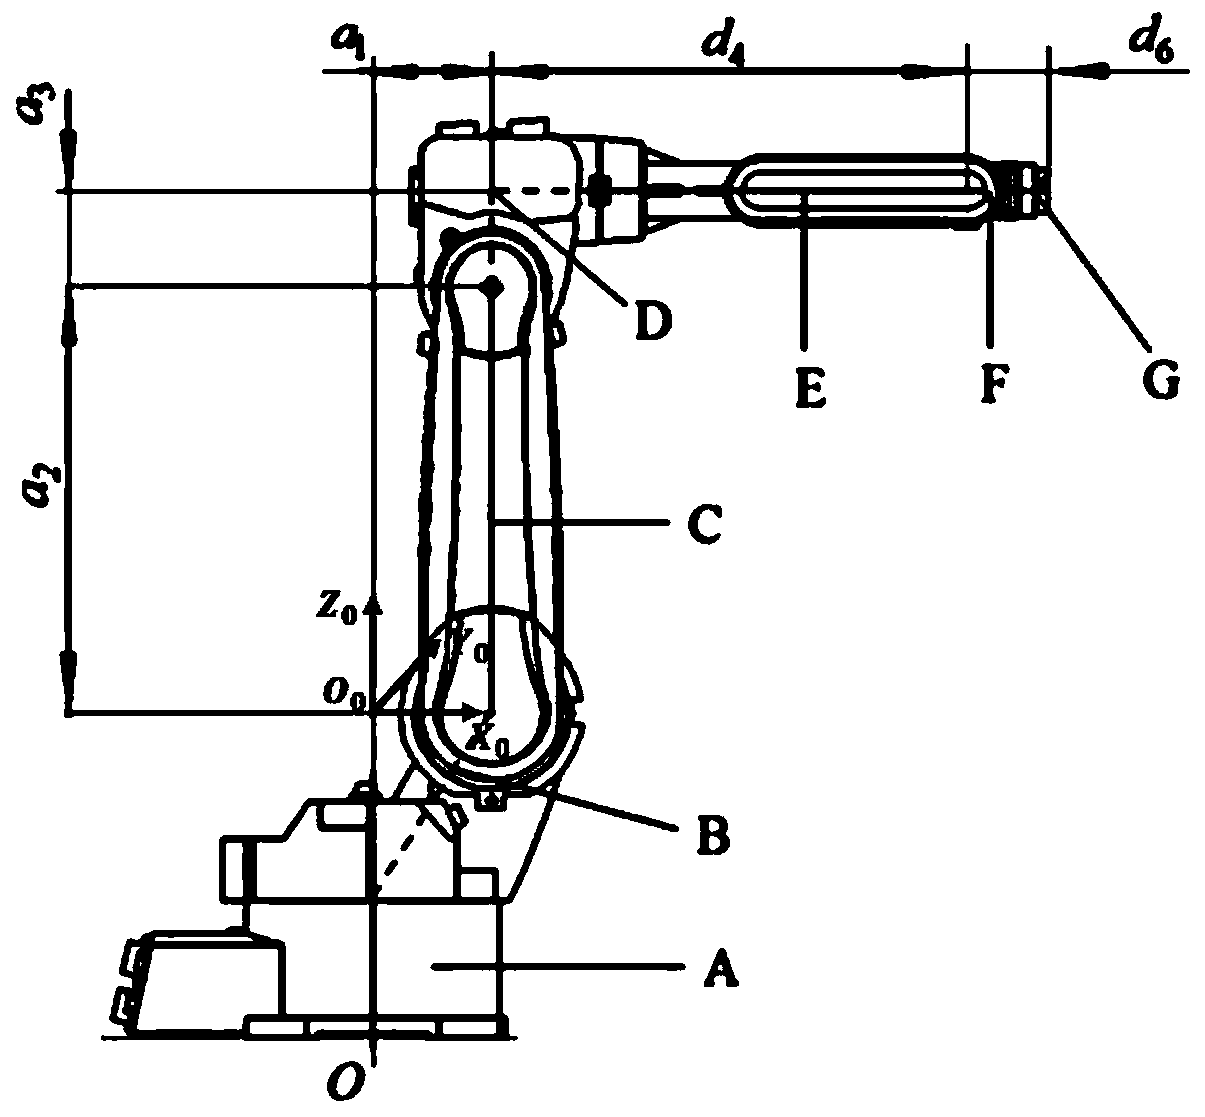 Mechanical arm kinematics parameter calibration method based on measuring of laser tracker